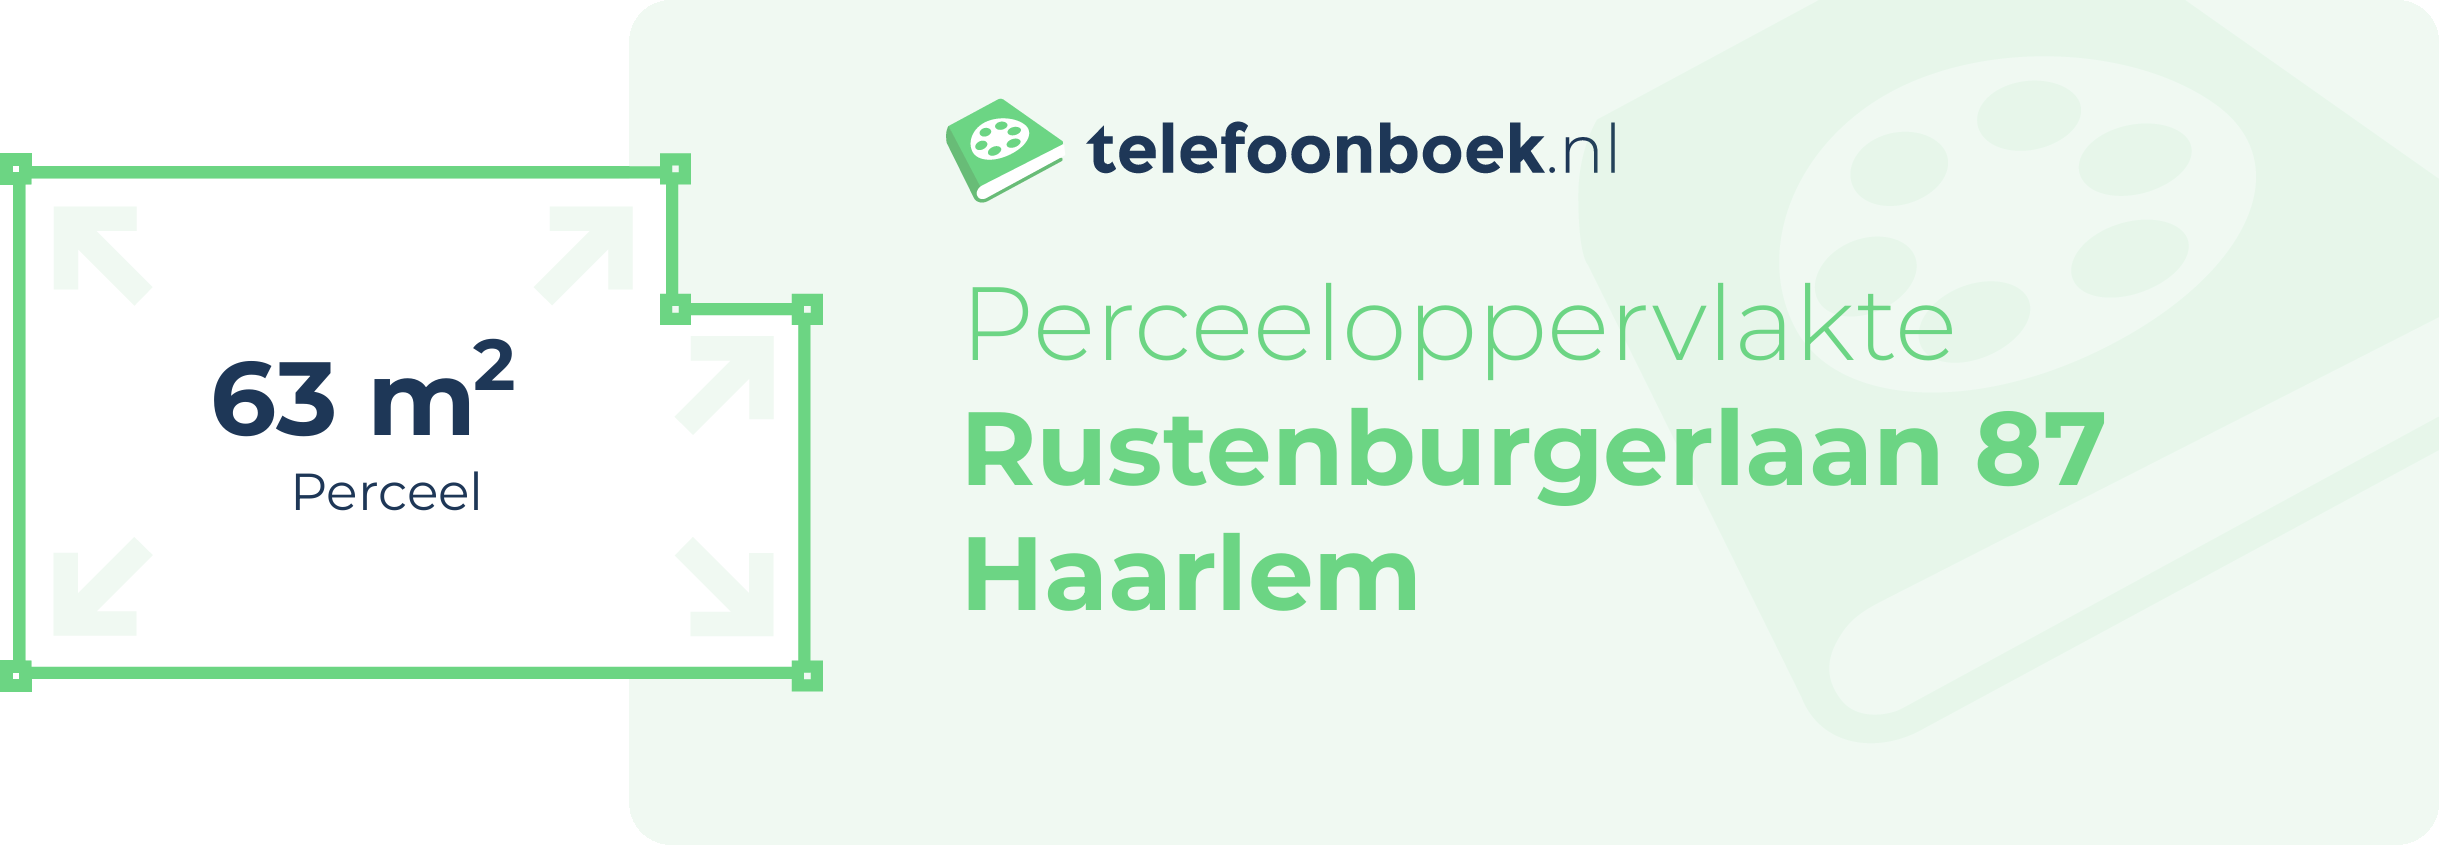 Perceeloppervlakte Rustenburgerlaan 87 Haarlem